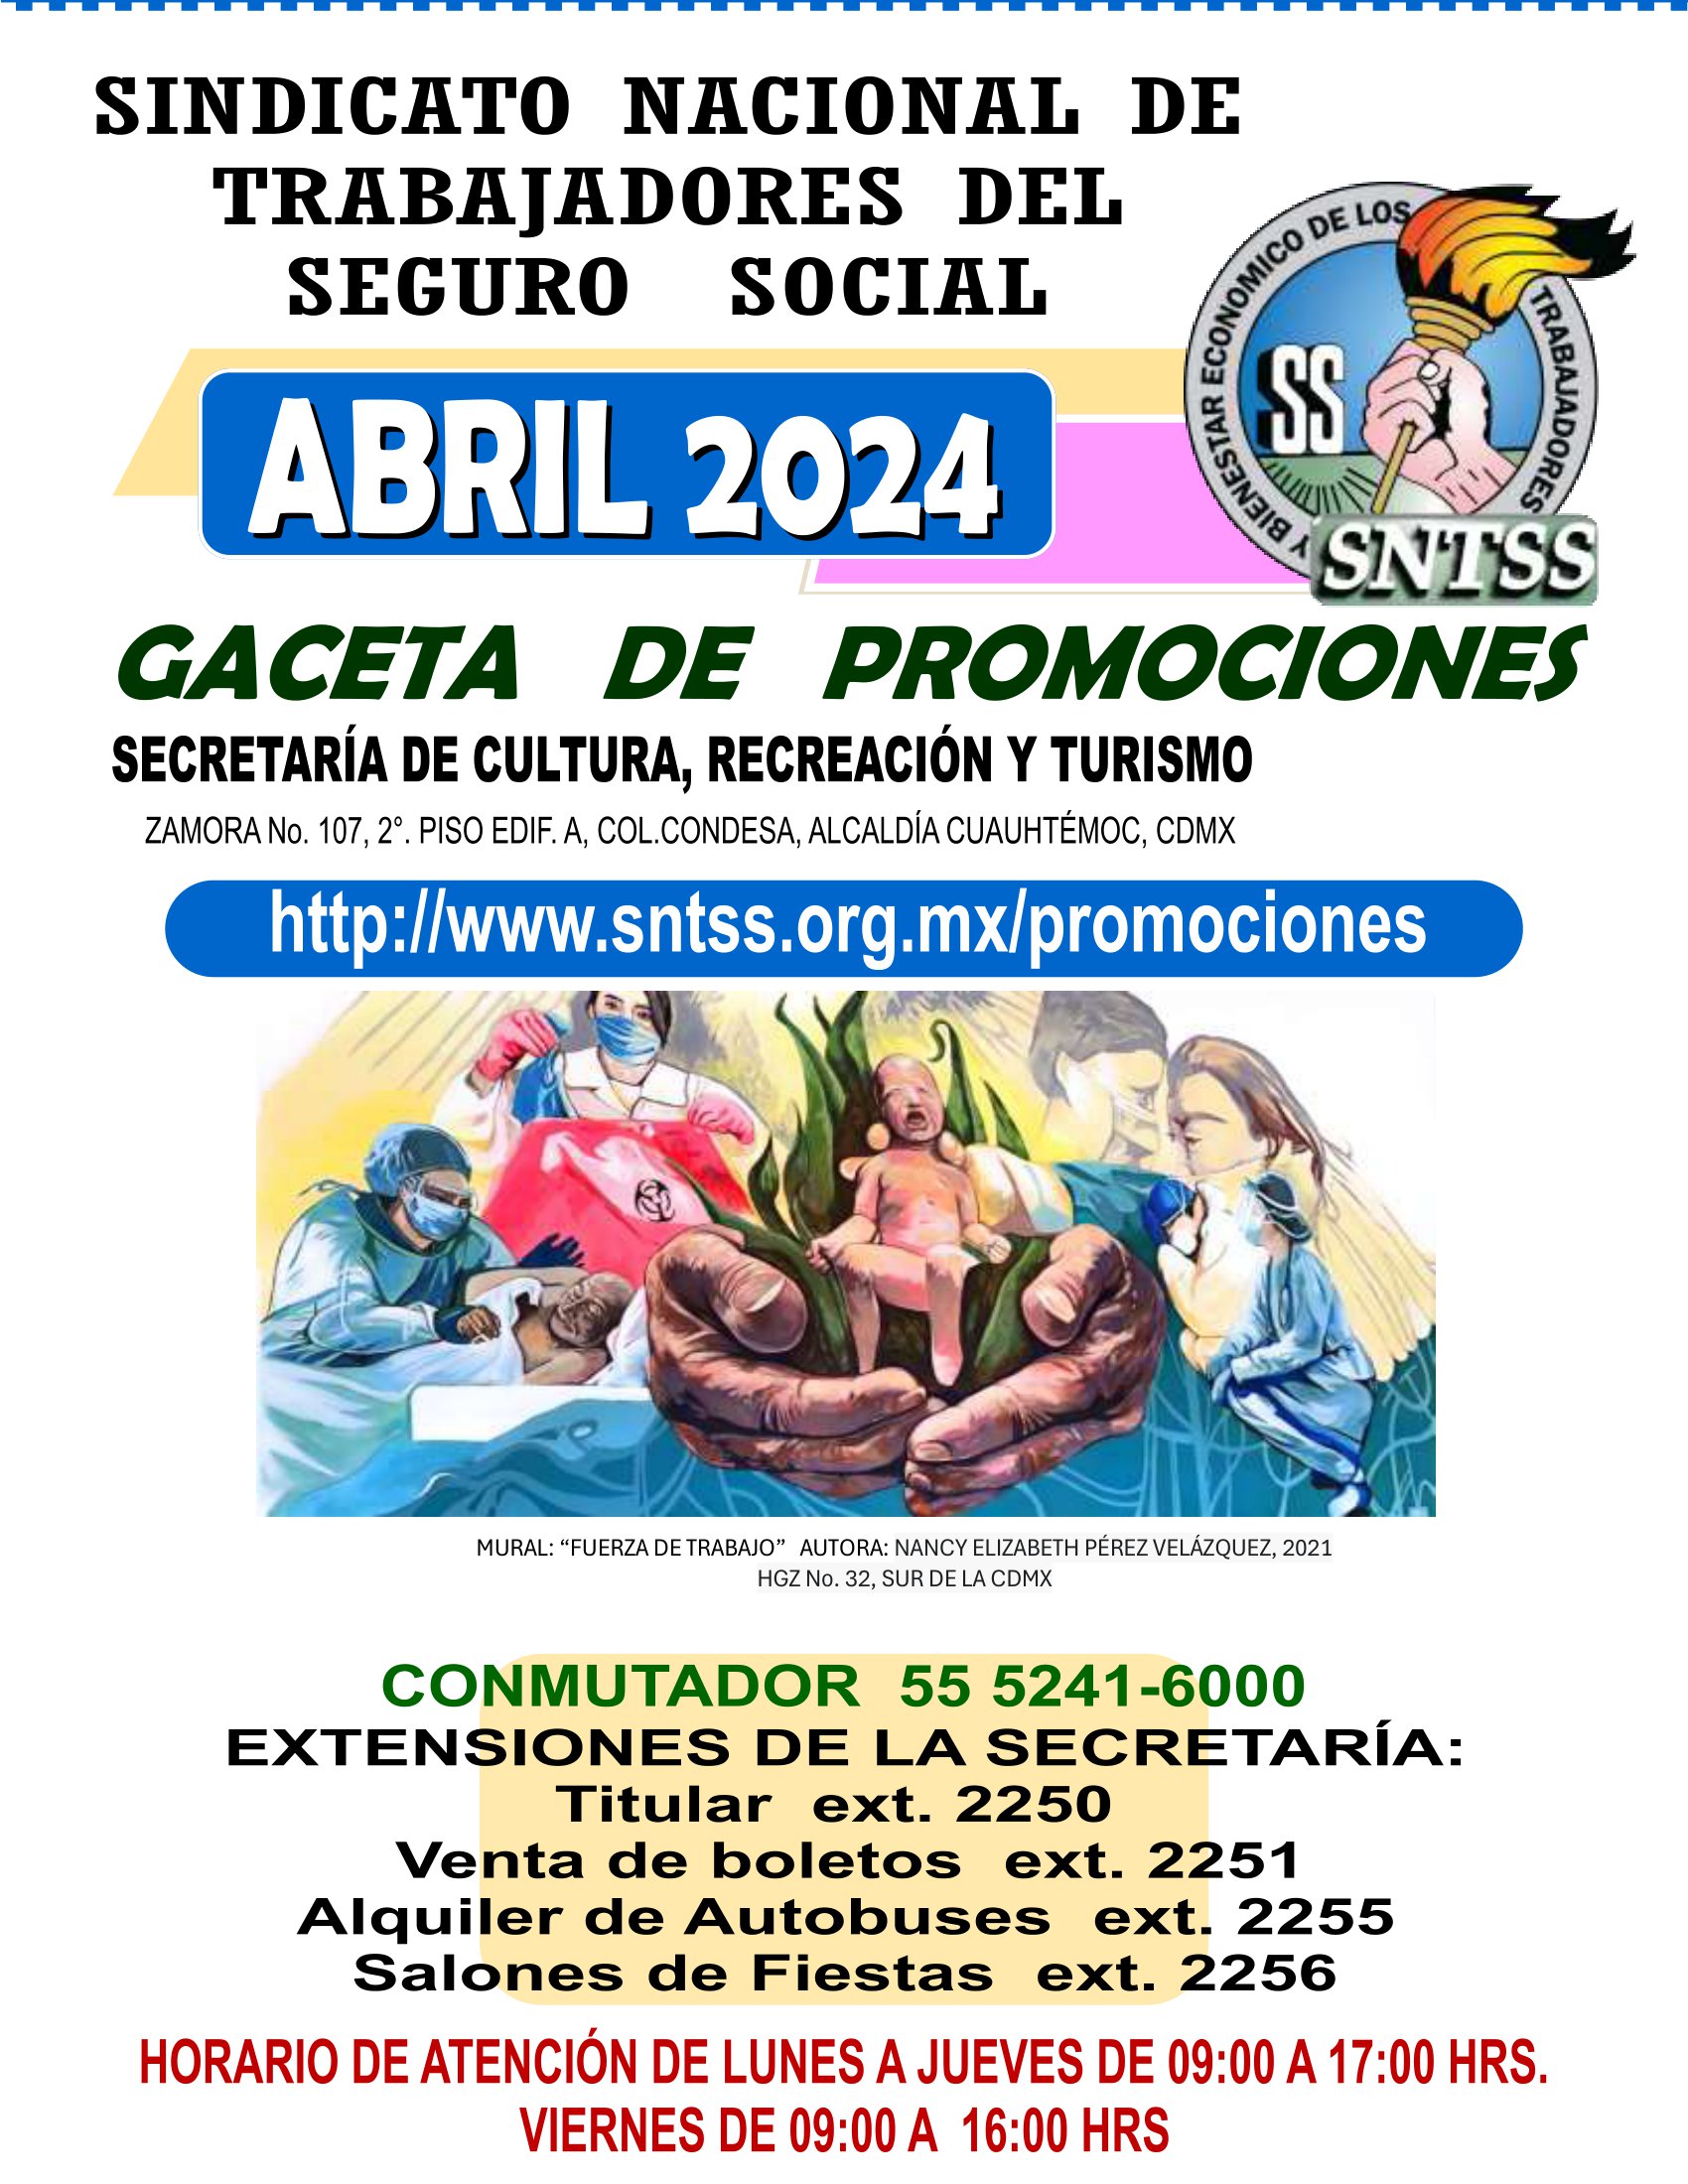 gaceta-abril-2024-001661eadcd7bf1b.jpg